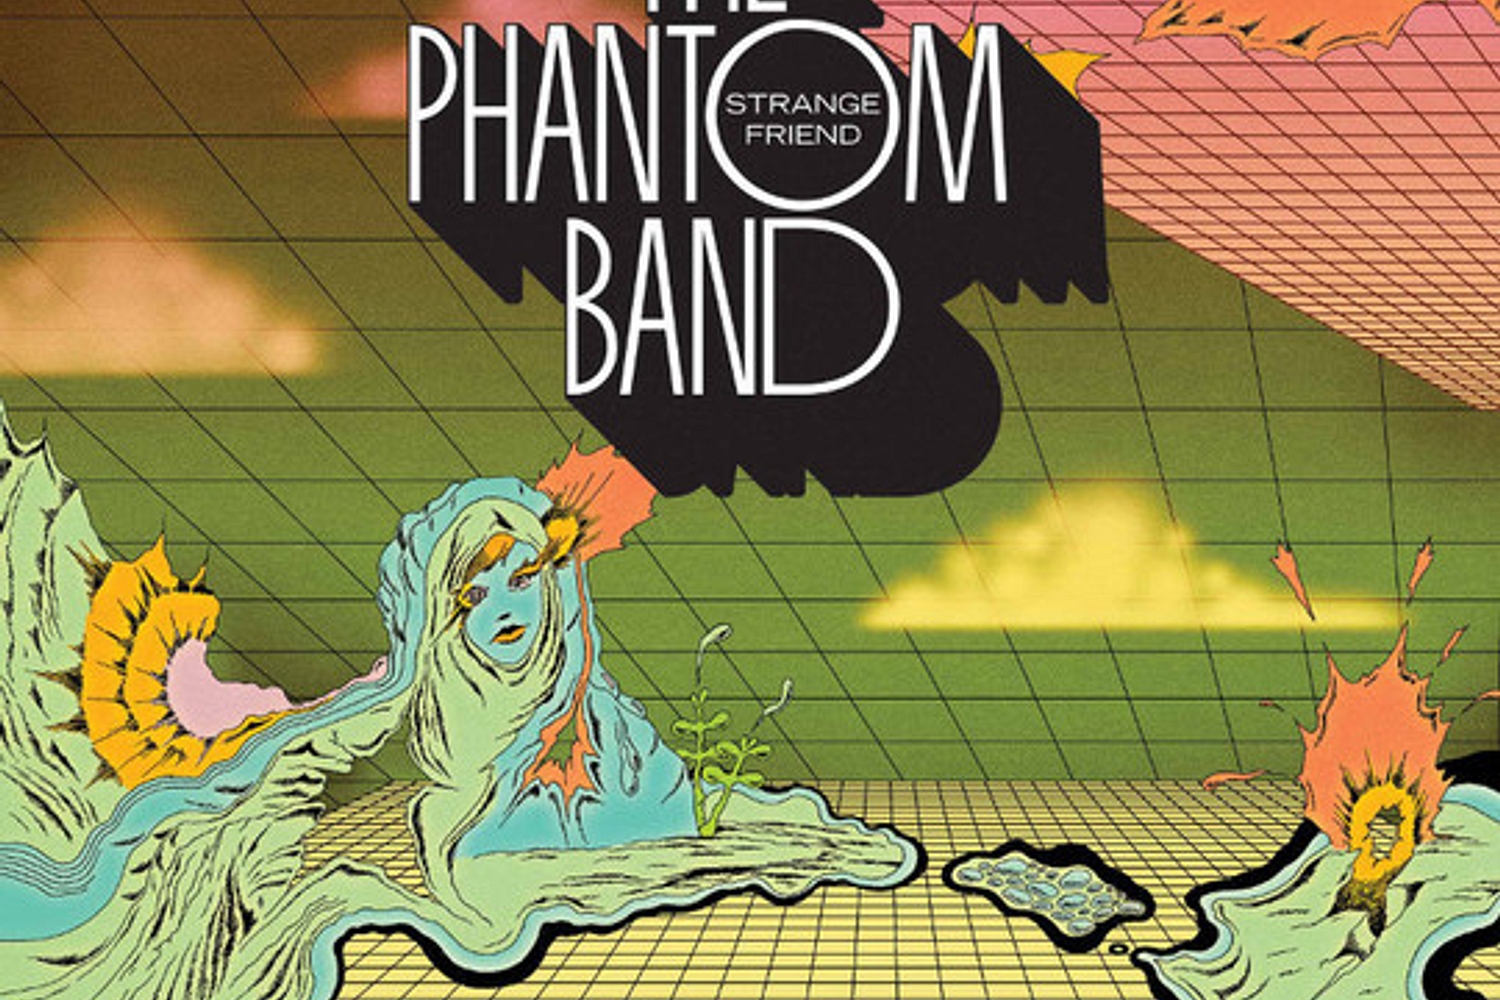 The Phantom Band - Strange Friend